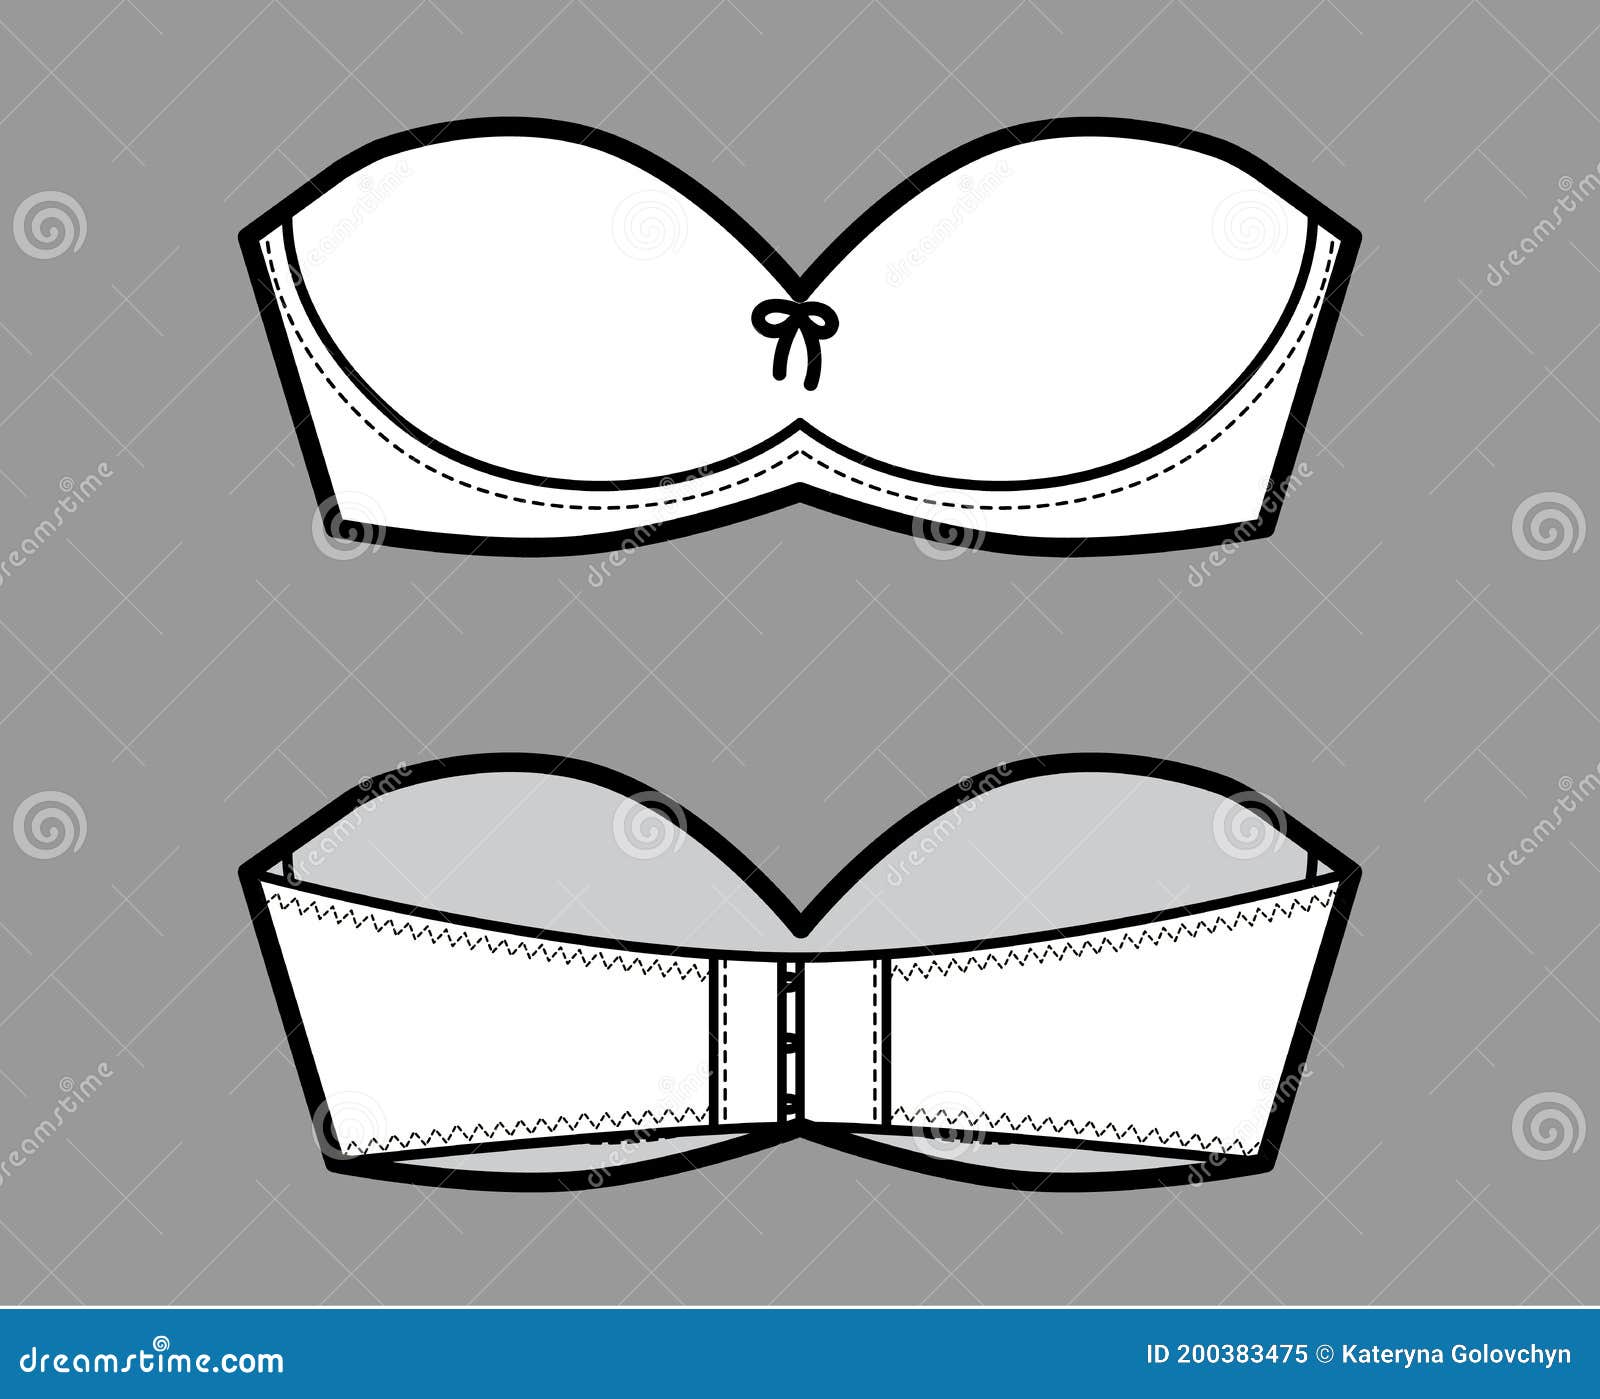 https://thumbs.dreamstime.com/z/bra-strapless-lingerie-technical-fashion-illustration-molded-cups-hook-eye-closure-flat-brassiere-template-bra-strapless-200383475.jpg